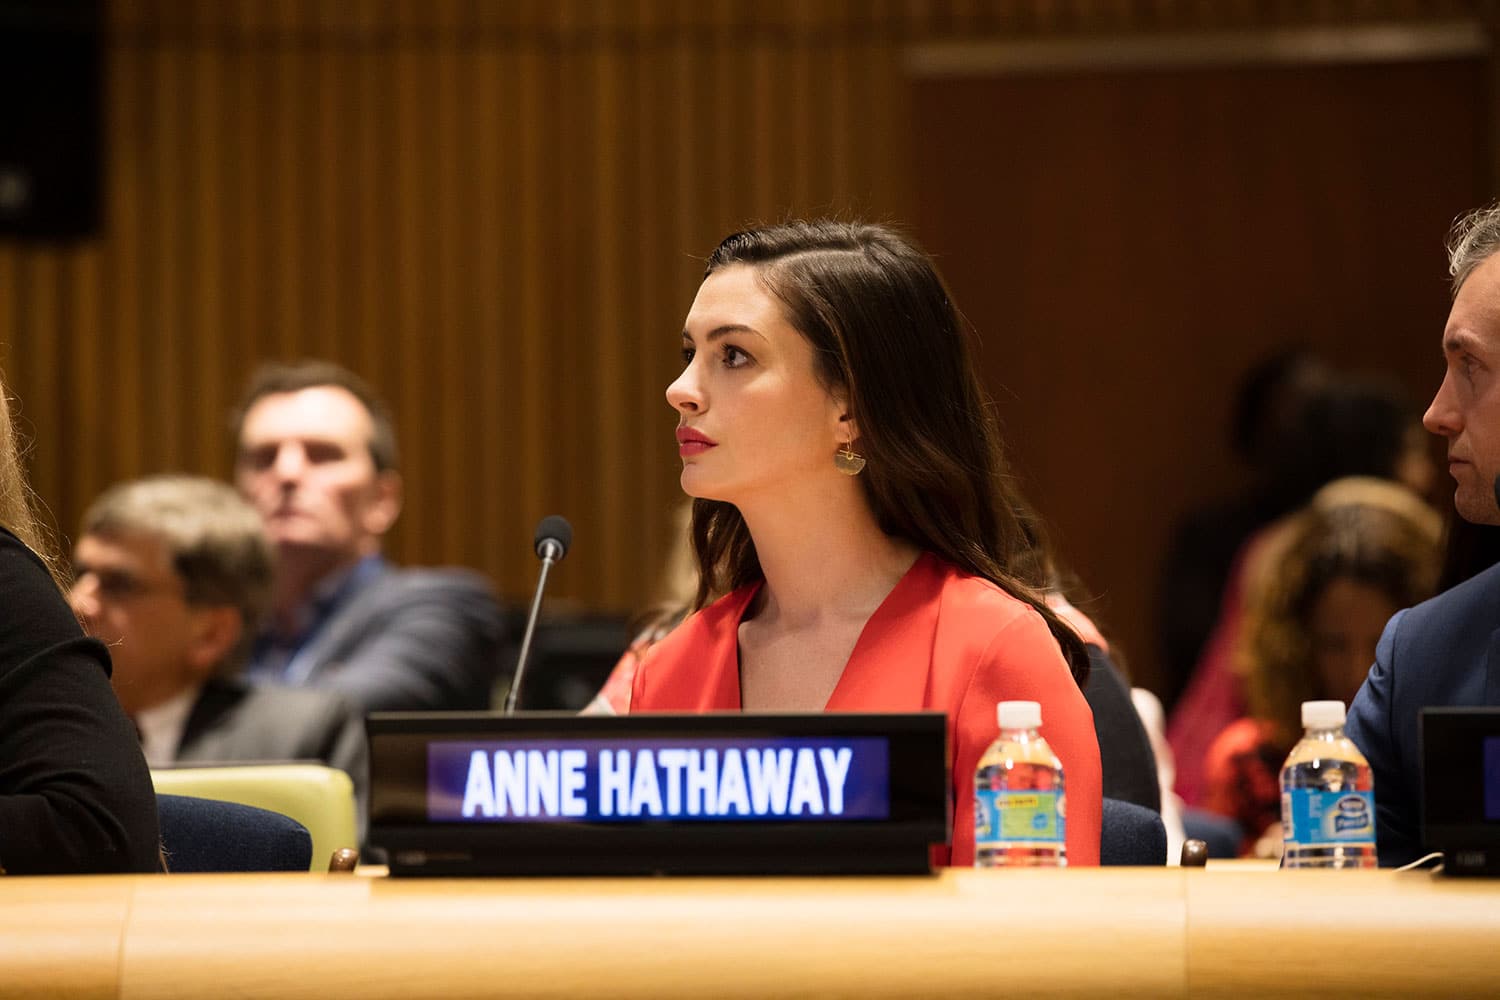 UN Women Global Goodwill Ambassador Anne Hathaway before delivering her keynote address. (Photo: UN Women/Celeste Sloman)